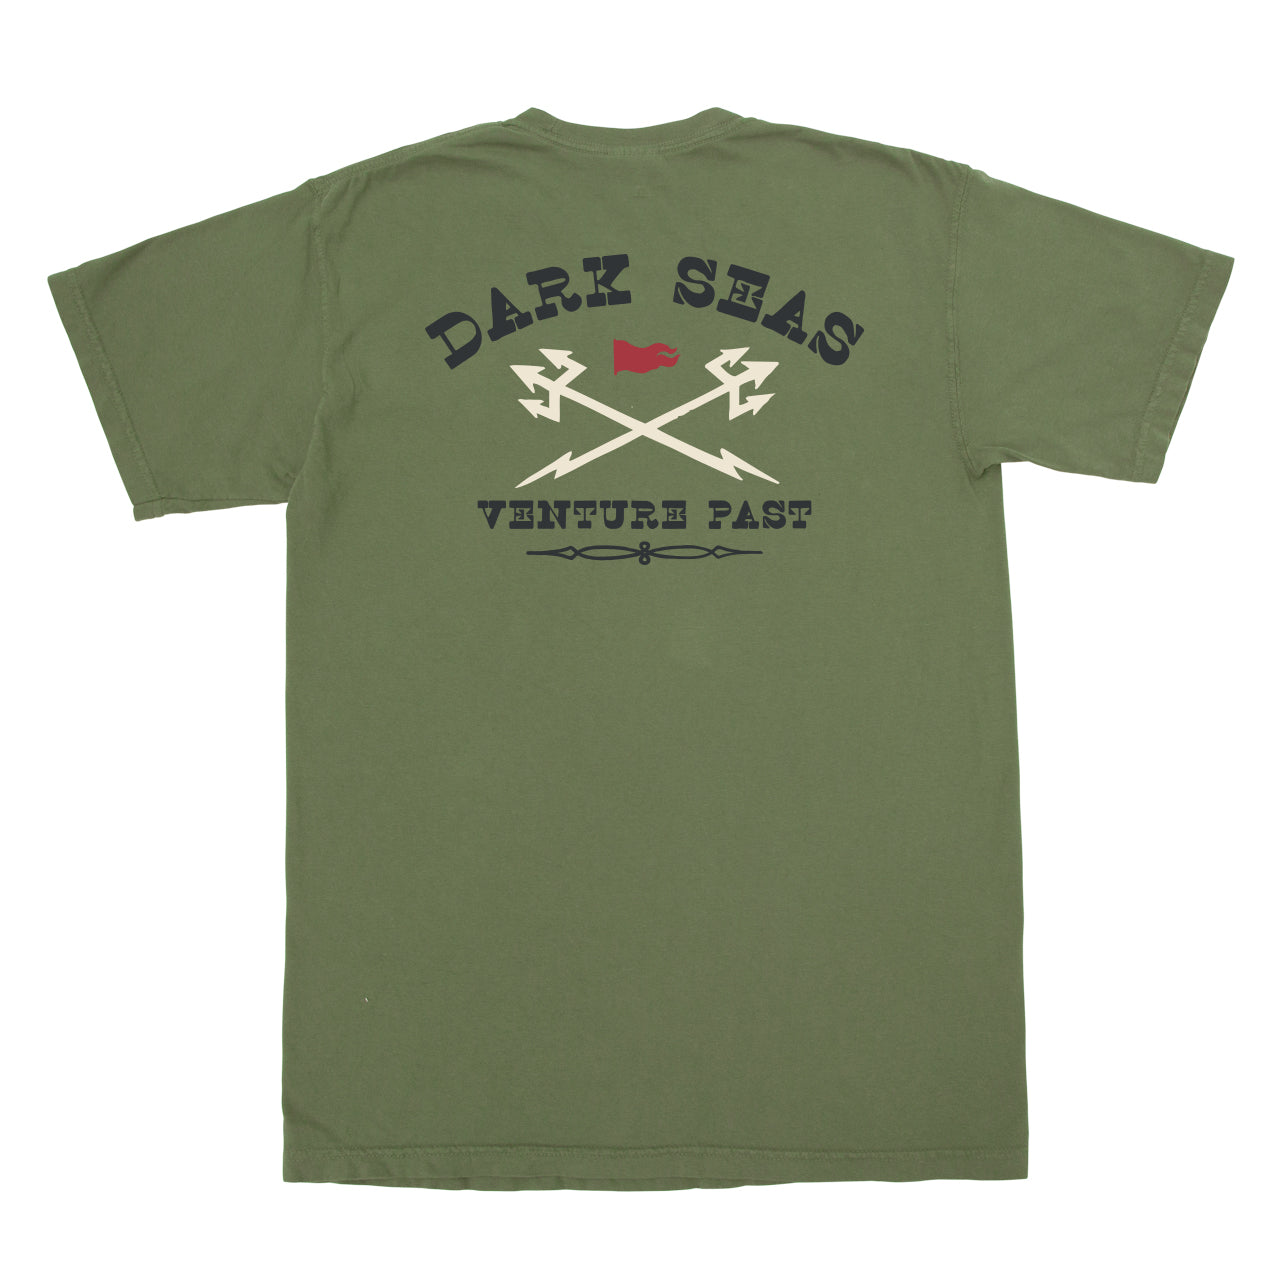 Dark Seas Tumbleweed Pigment Men's S/S T-Shirt